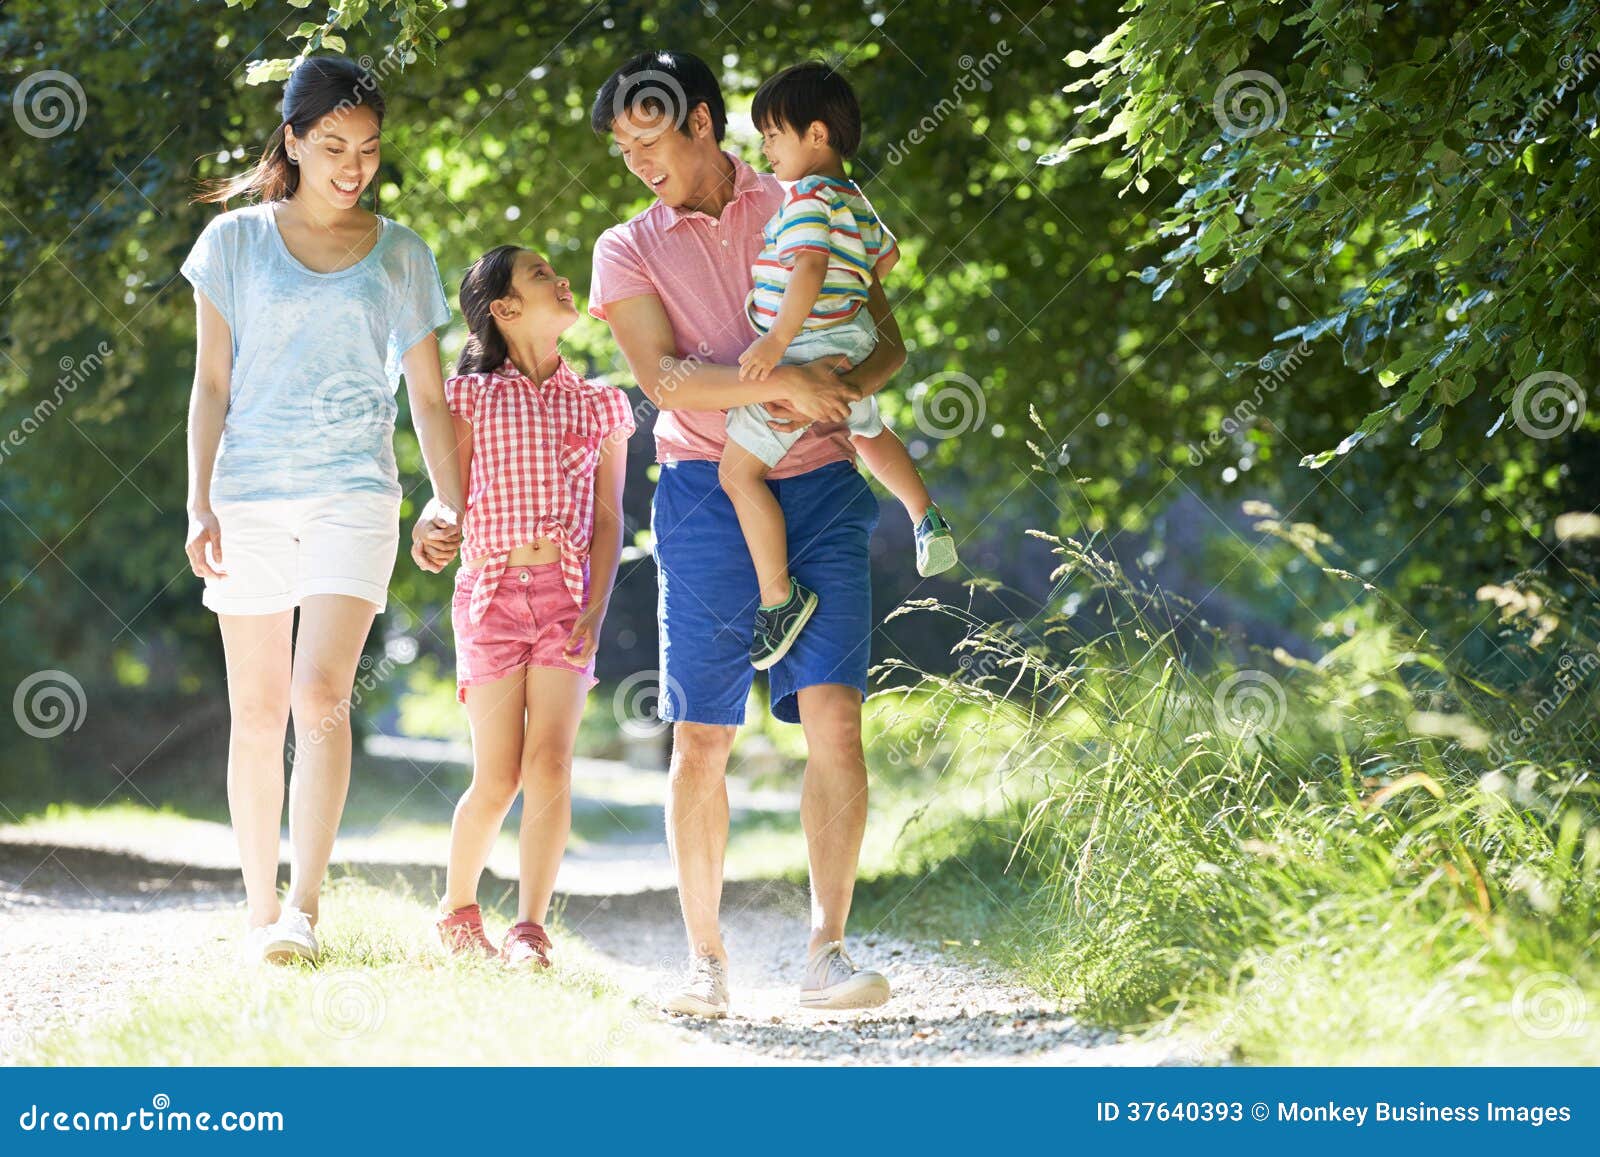 asian family enjoying walk in countryside